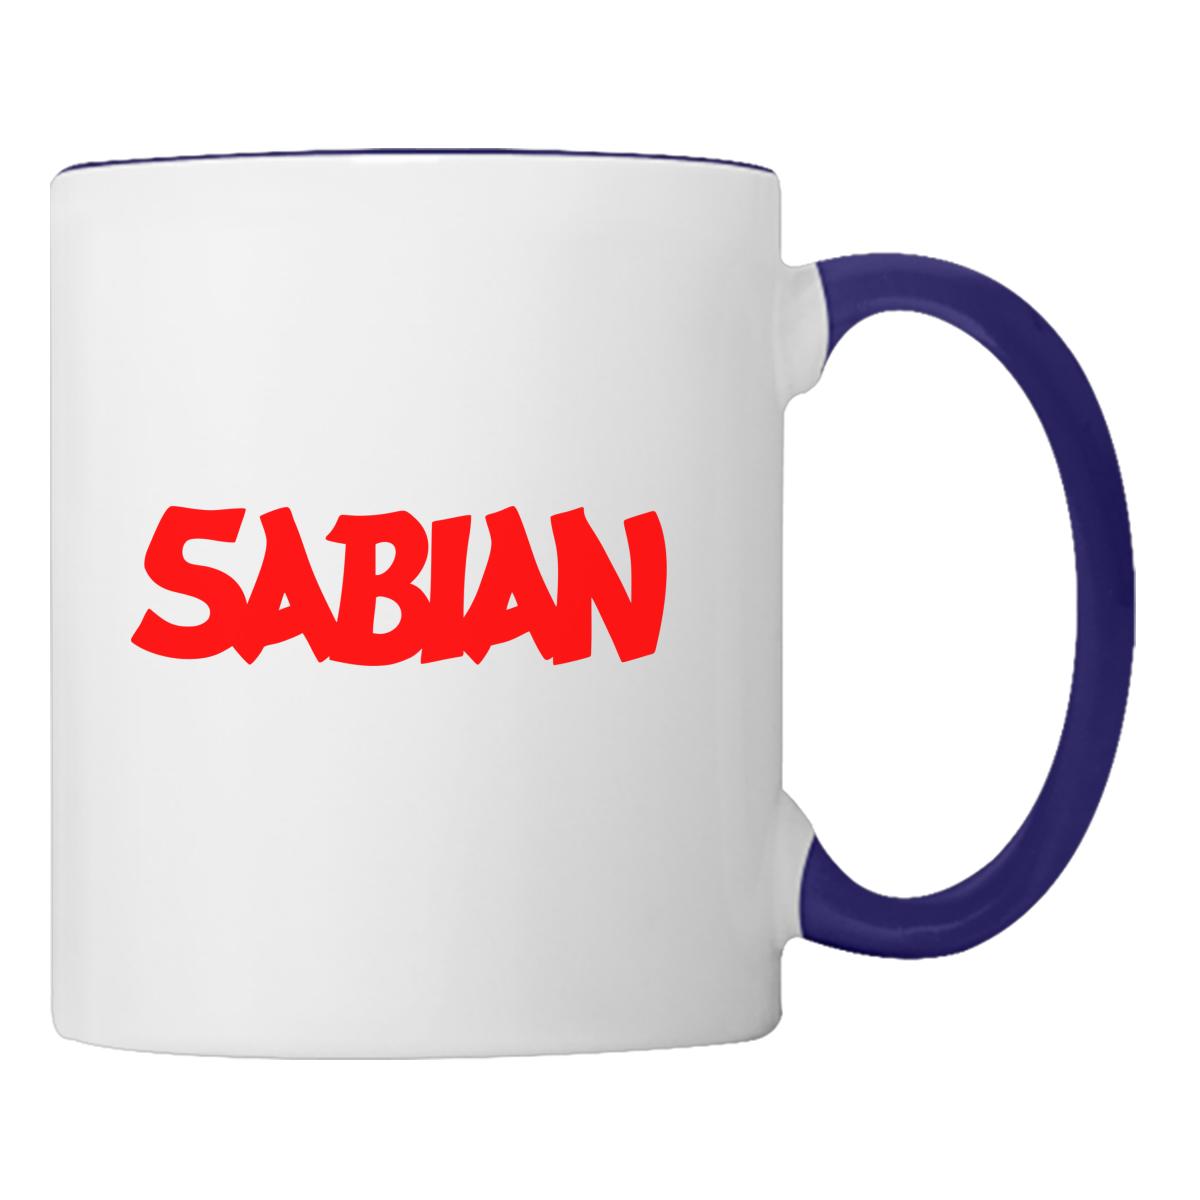 Sabian Logo - Sabian Cymbal Logo Coffee Mug